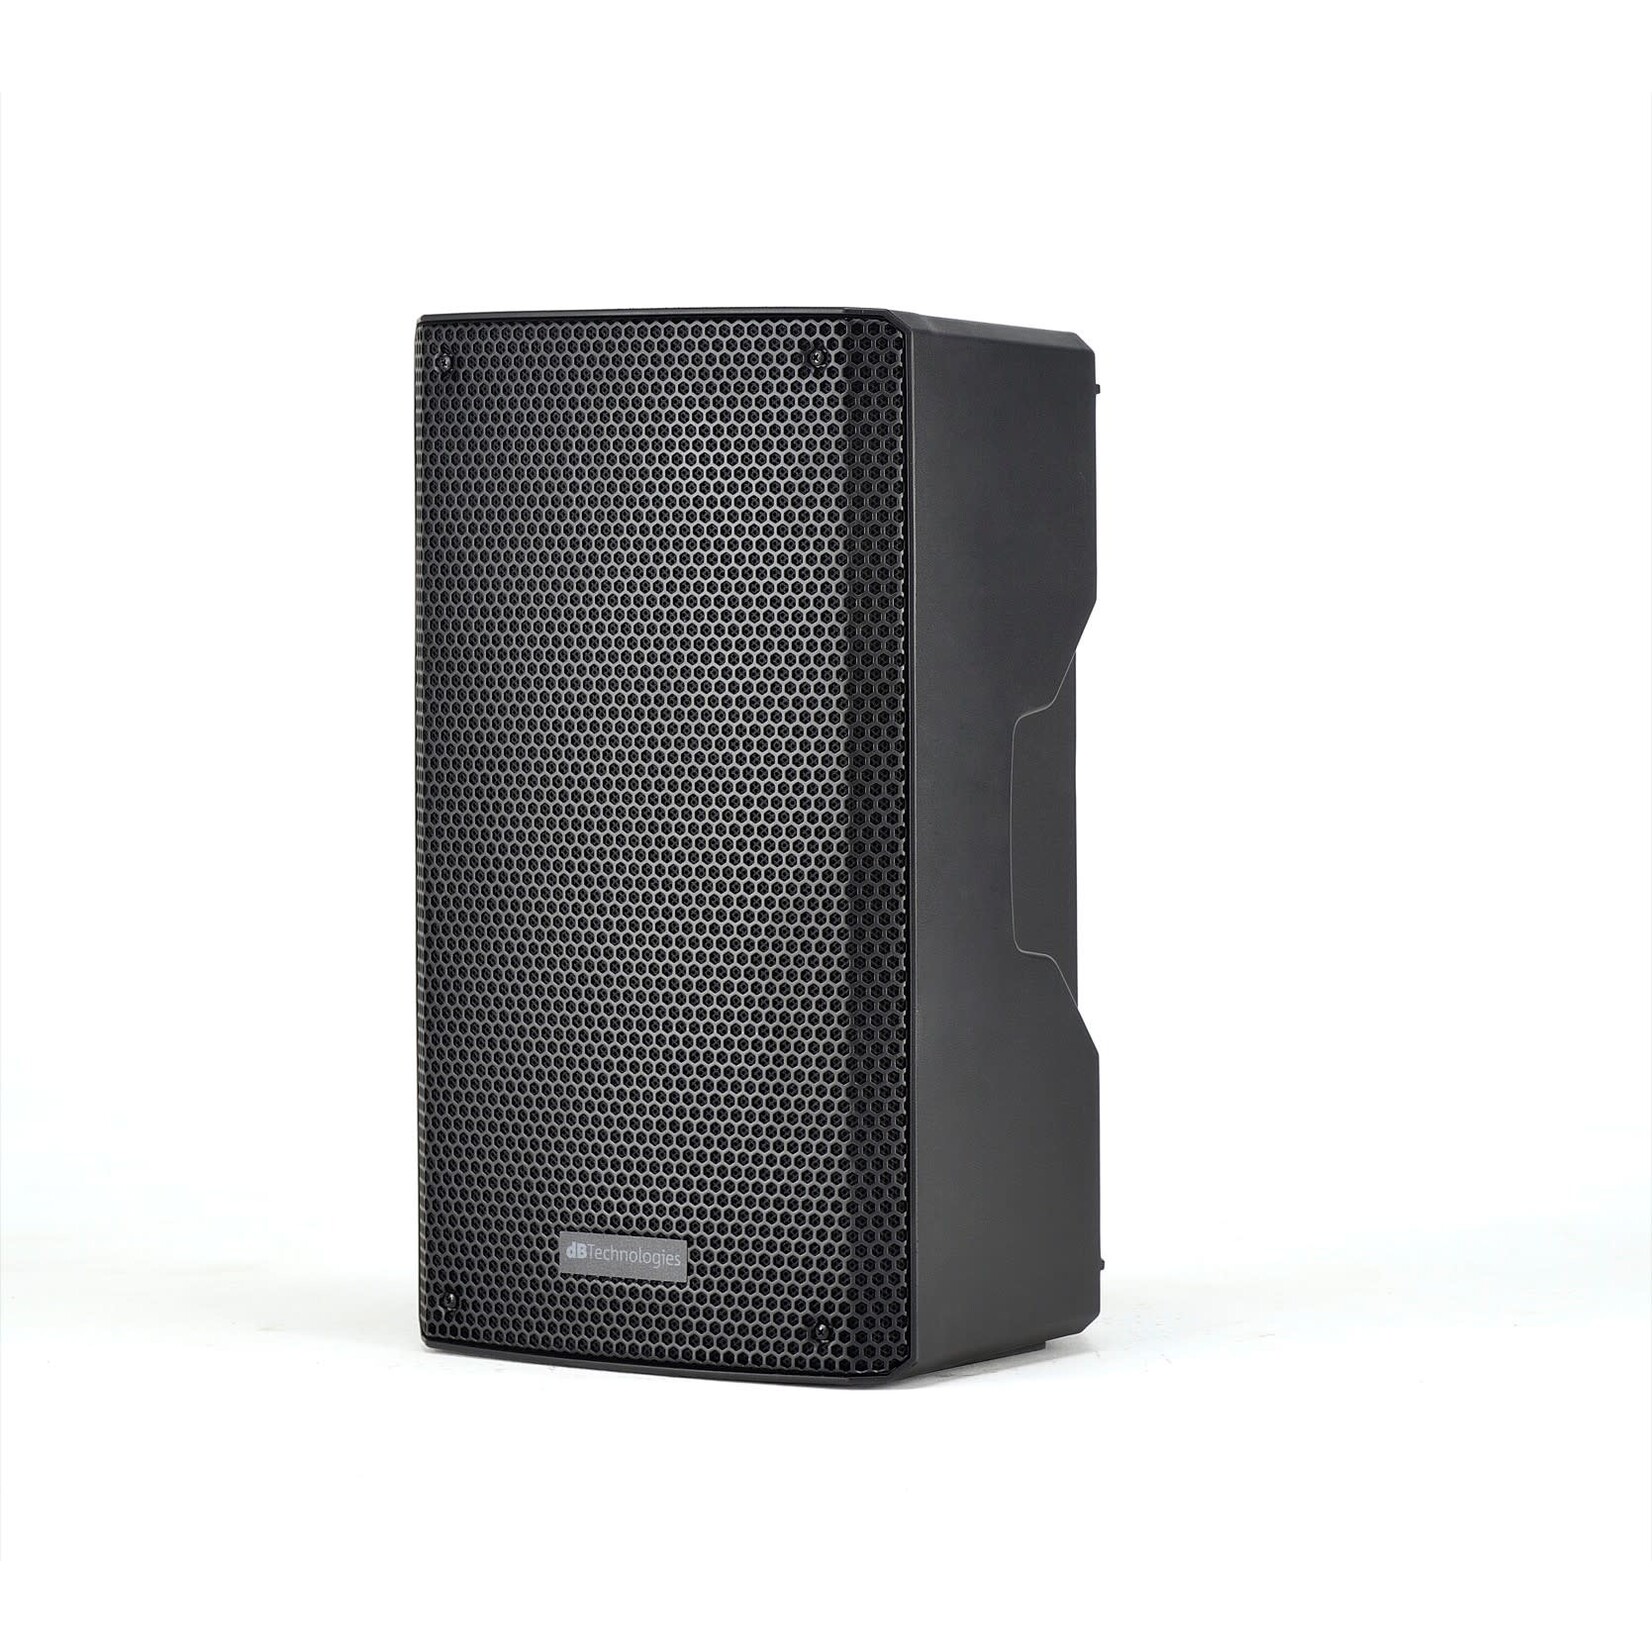 DB Technologies KL10 Powered Speakers (single)